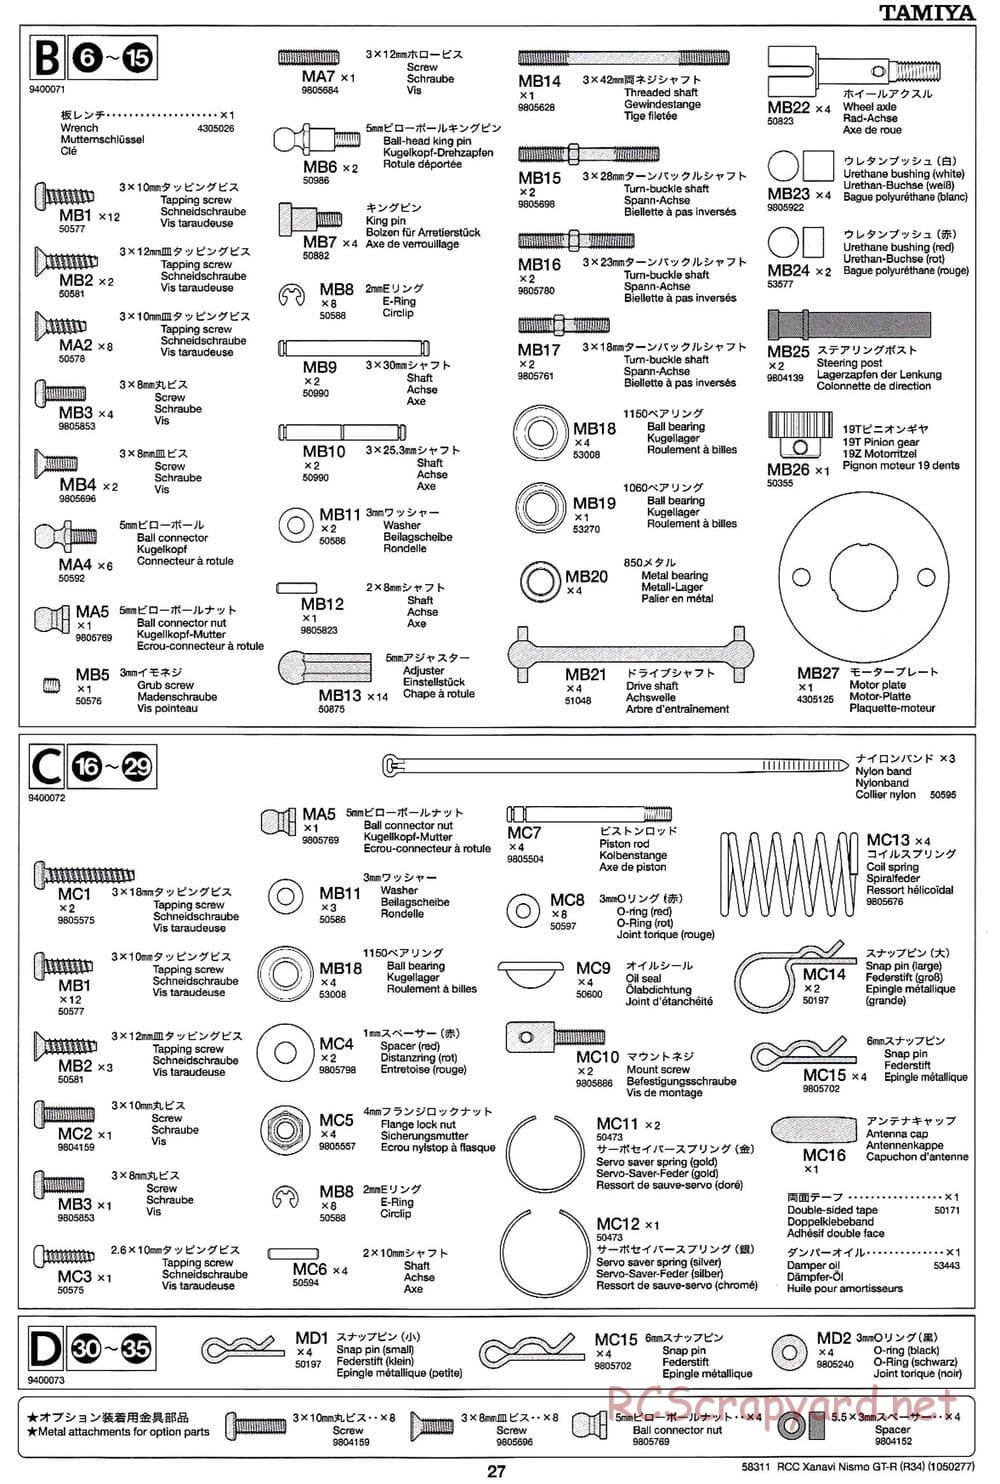 Tamiya - Xanavi Nismo GT-R (R34) - TB-02 Chassis - Manual - Page 27